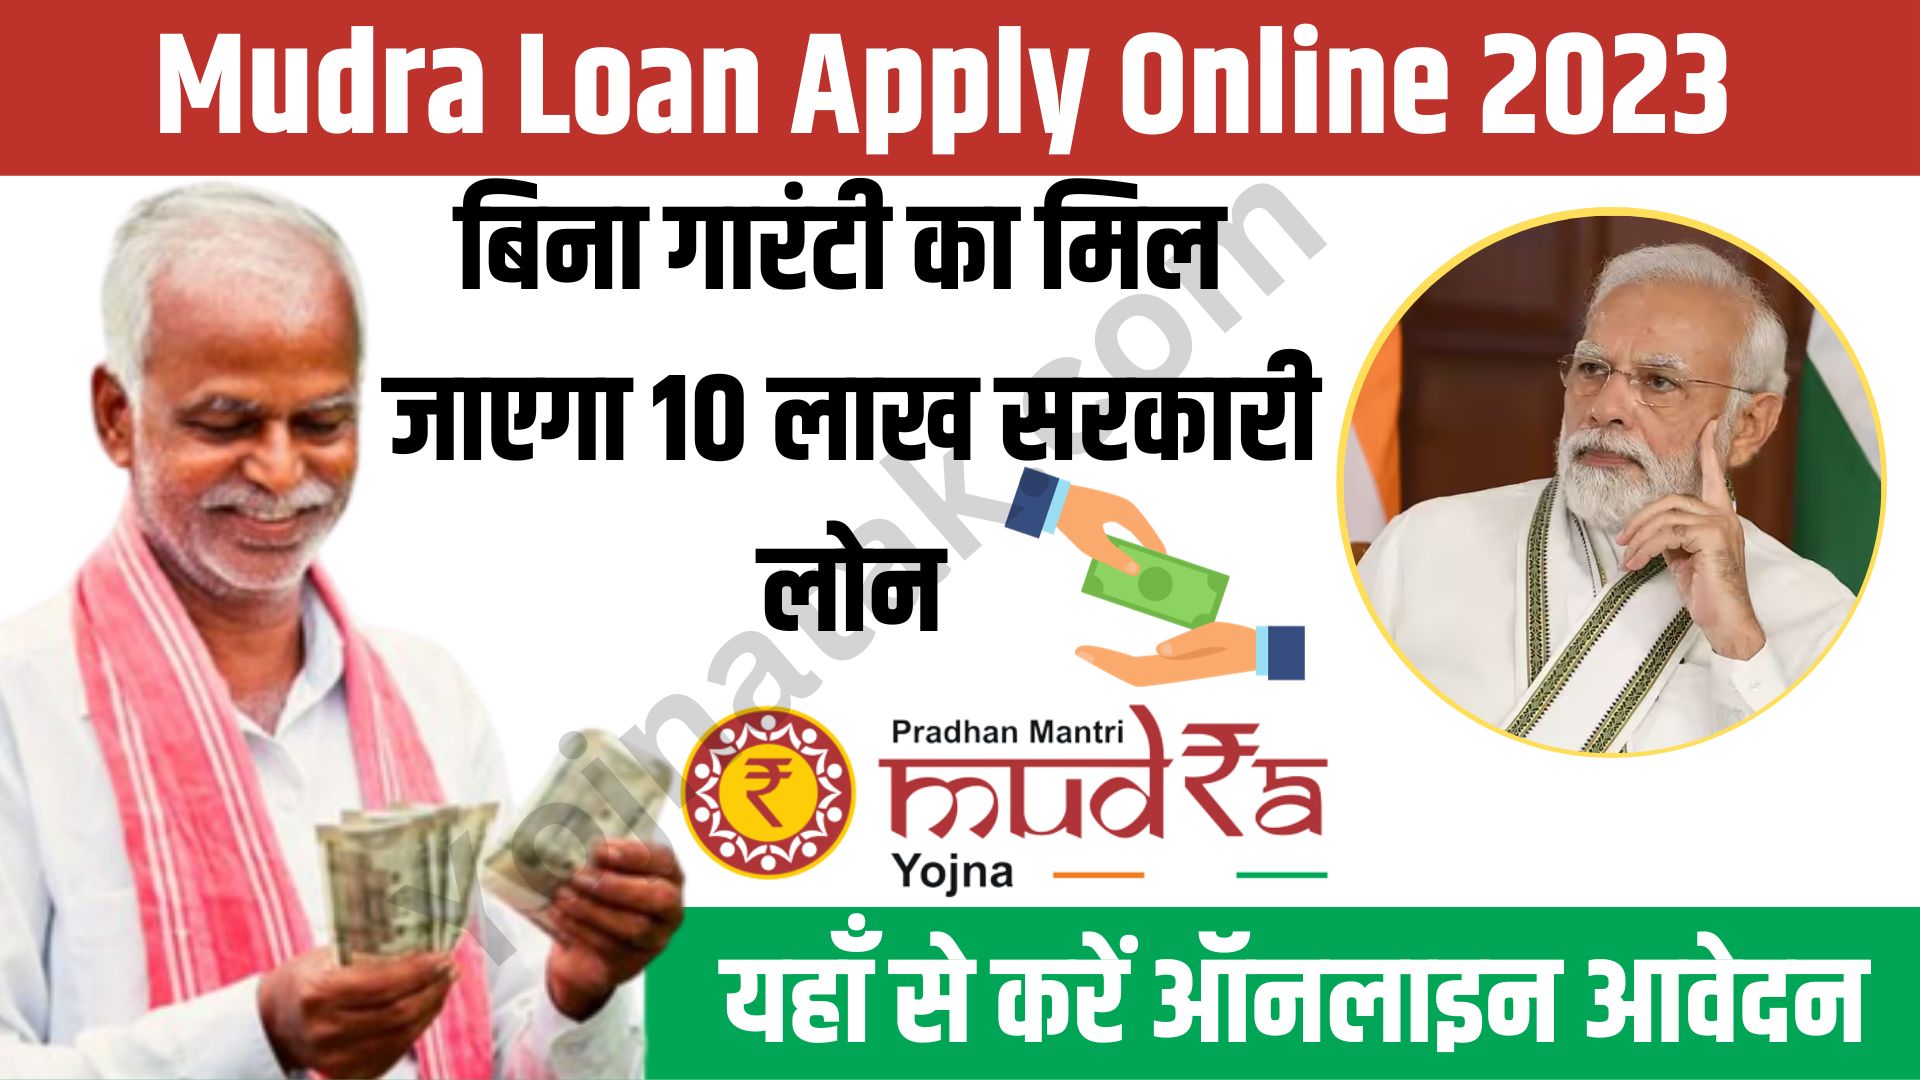 PM E MUDRA Loan Apply Online 2023